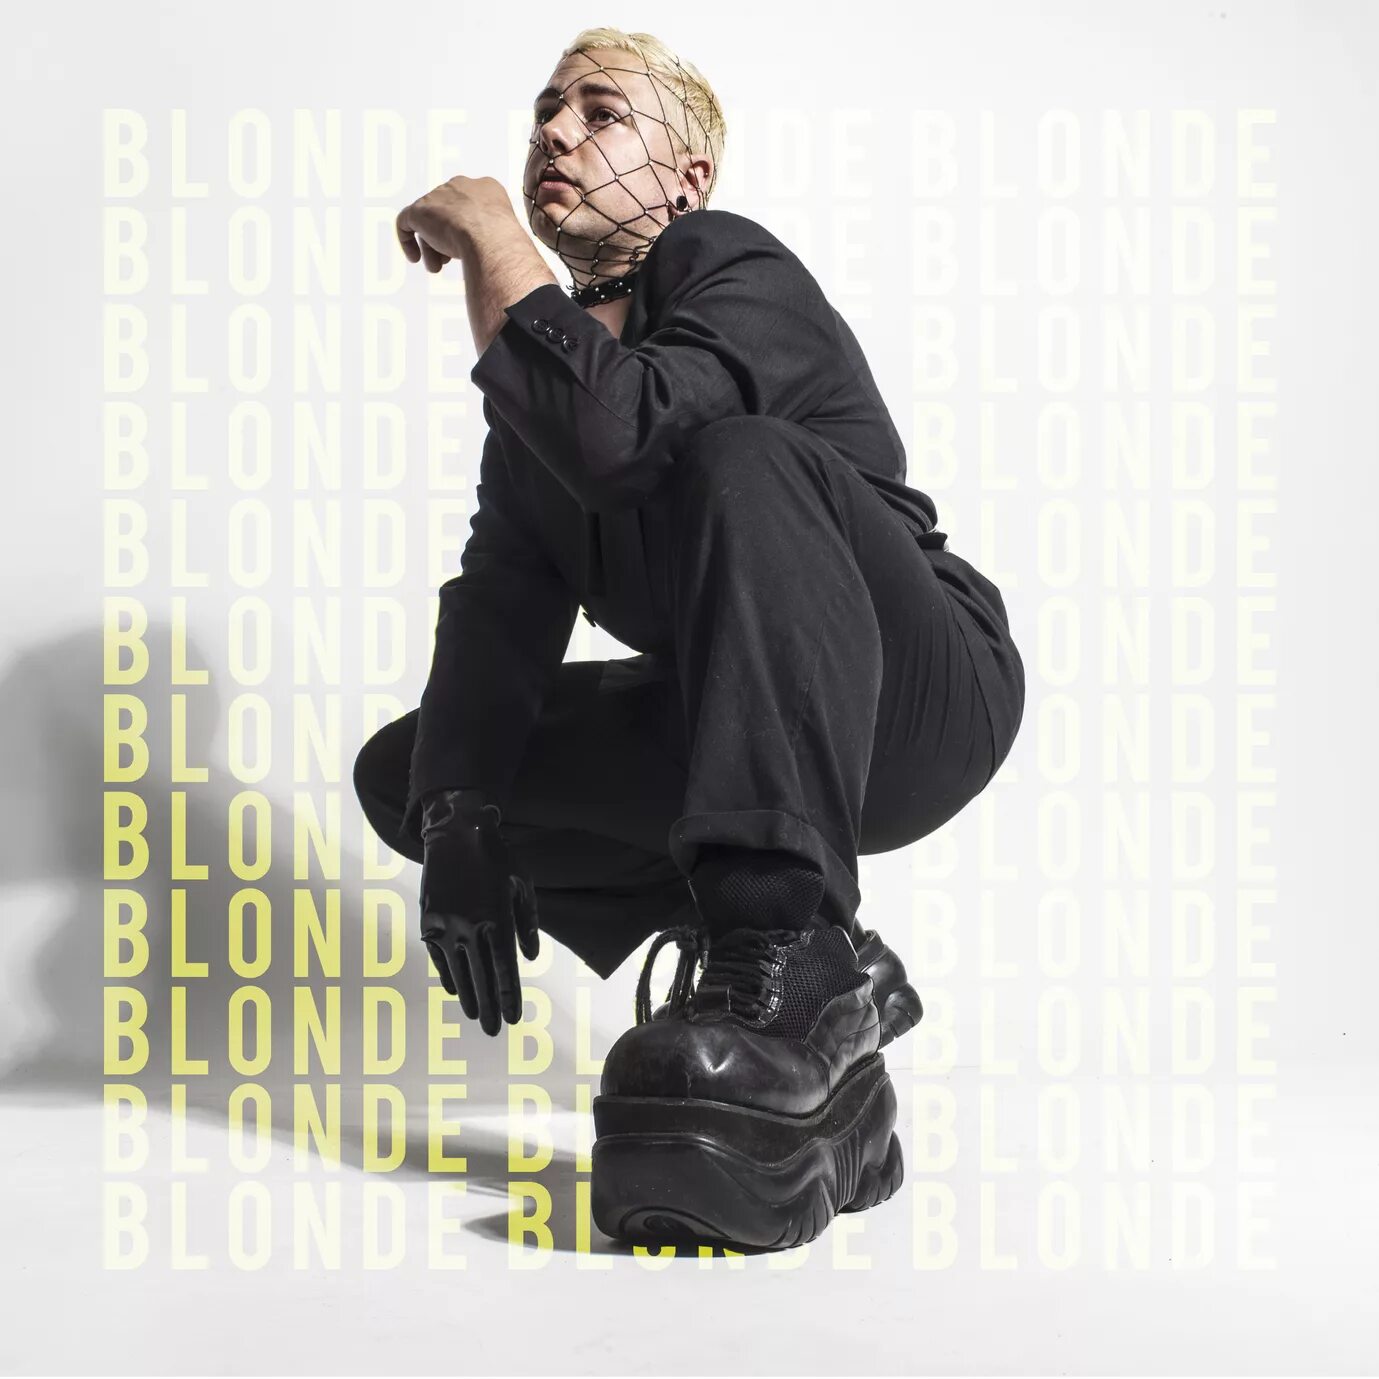 Деад блонде. Группа деад блонд. Дед блондин. Dead blonde альбом.